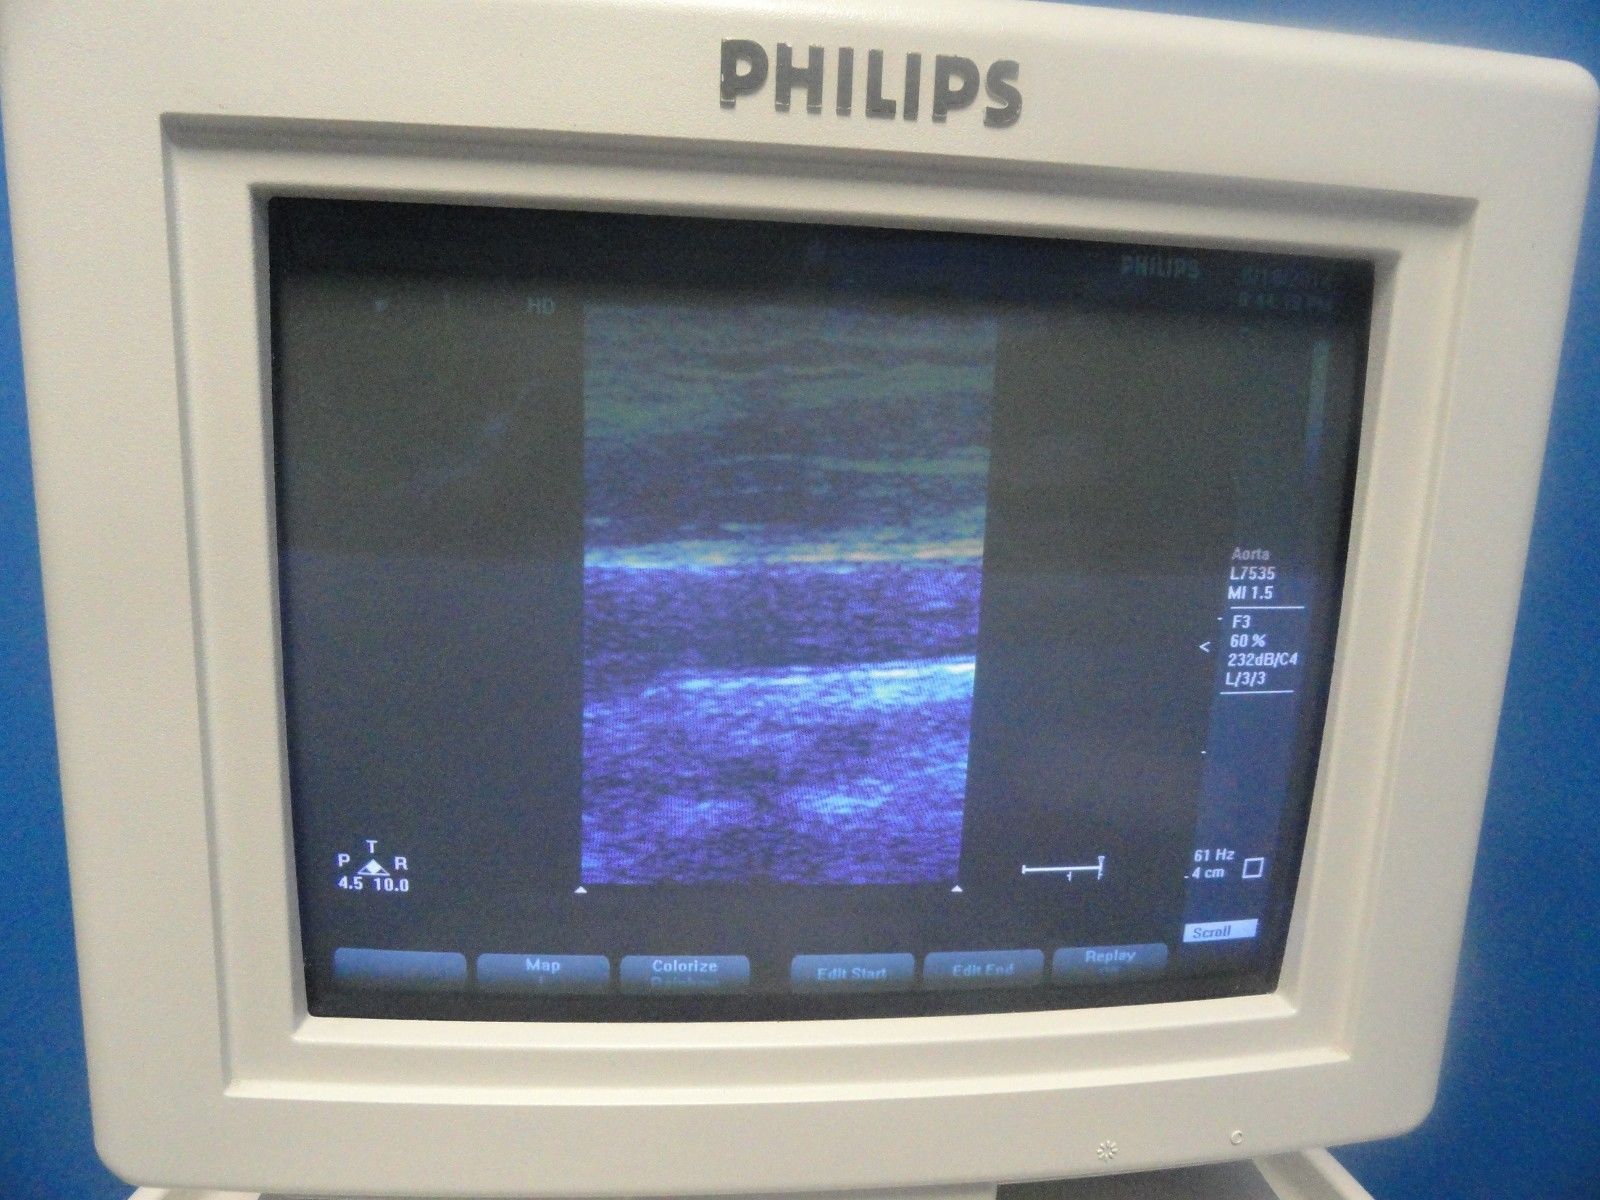 2002 AGILIENT PHILIPS L7535 / 23159A  Linear Array Vas. Ultrasound Probe (6776)